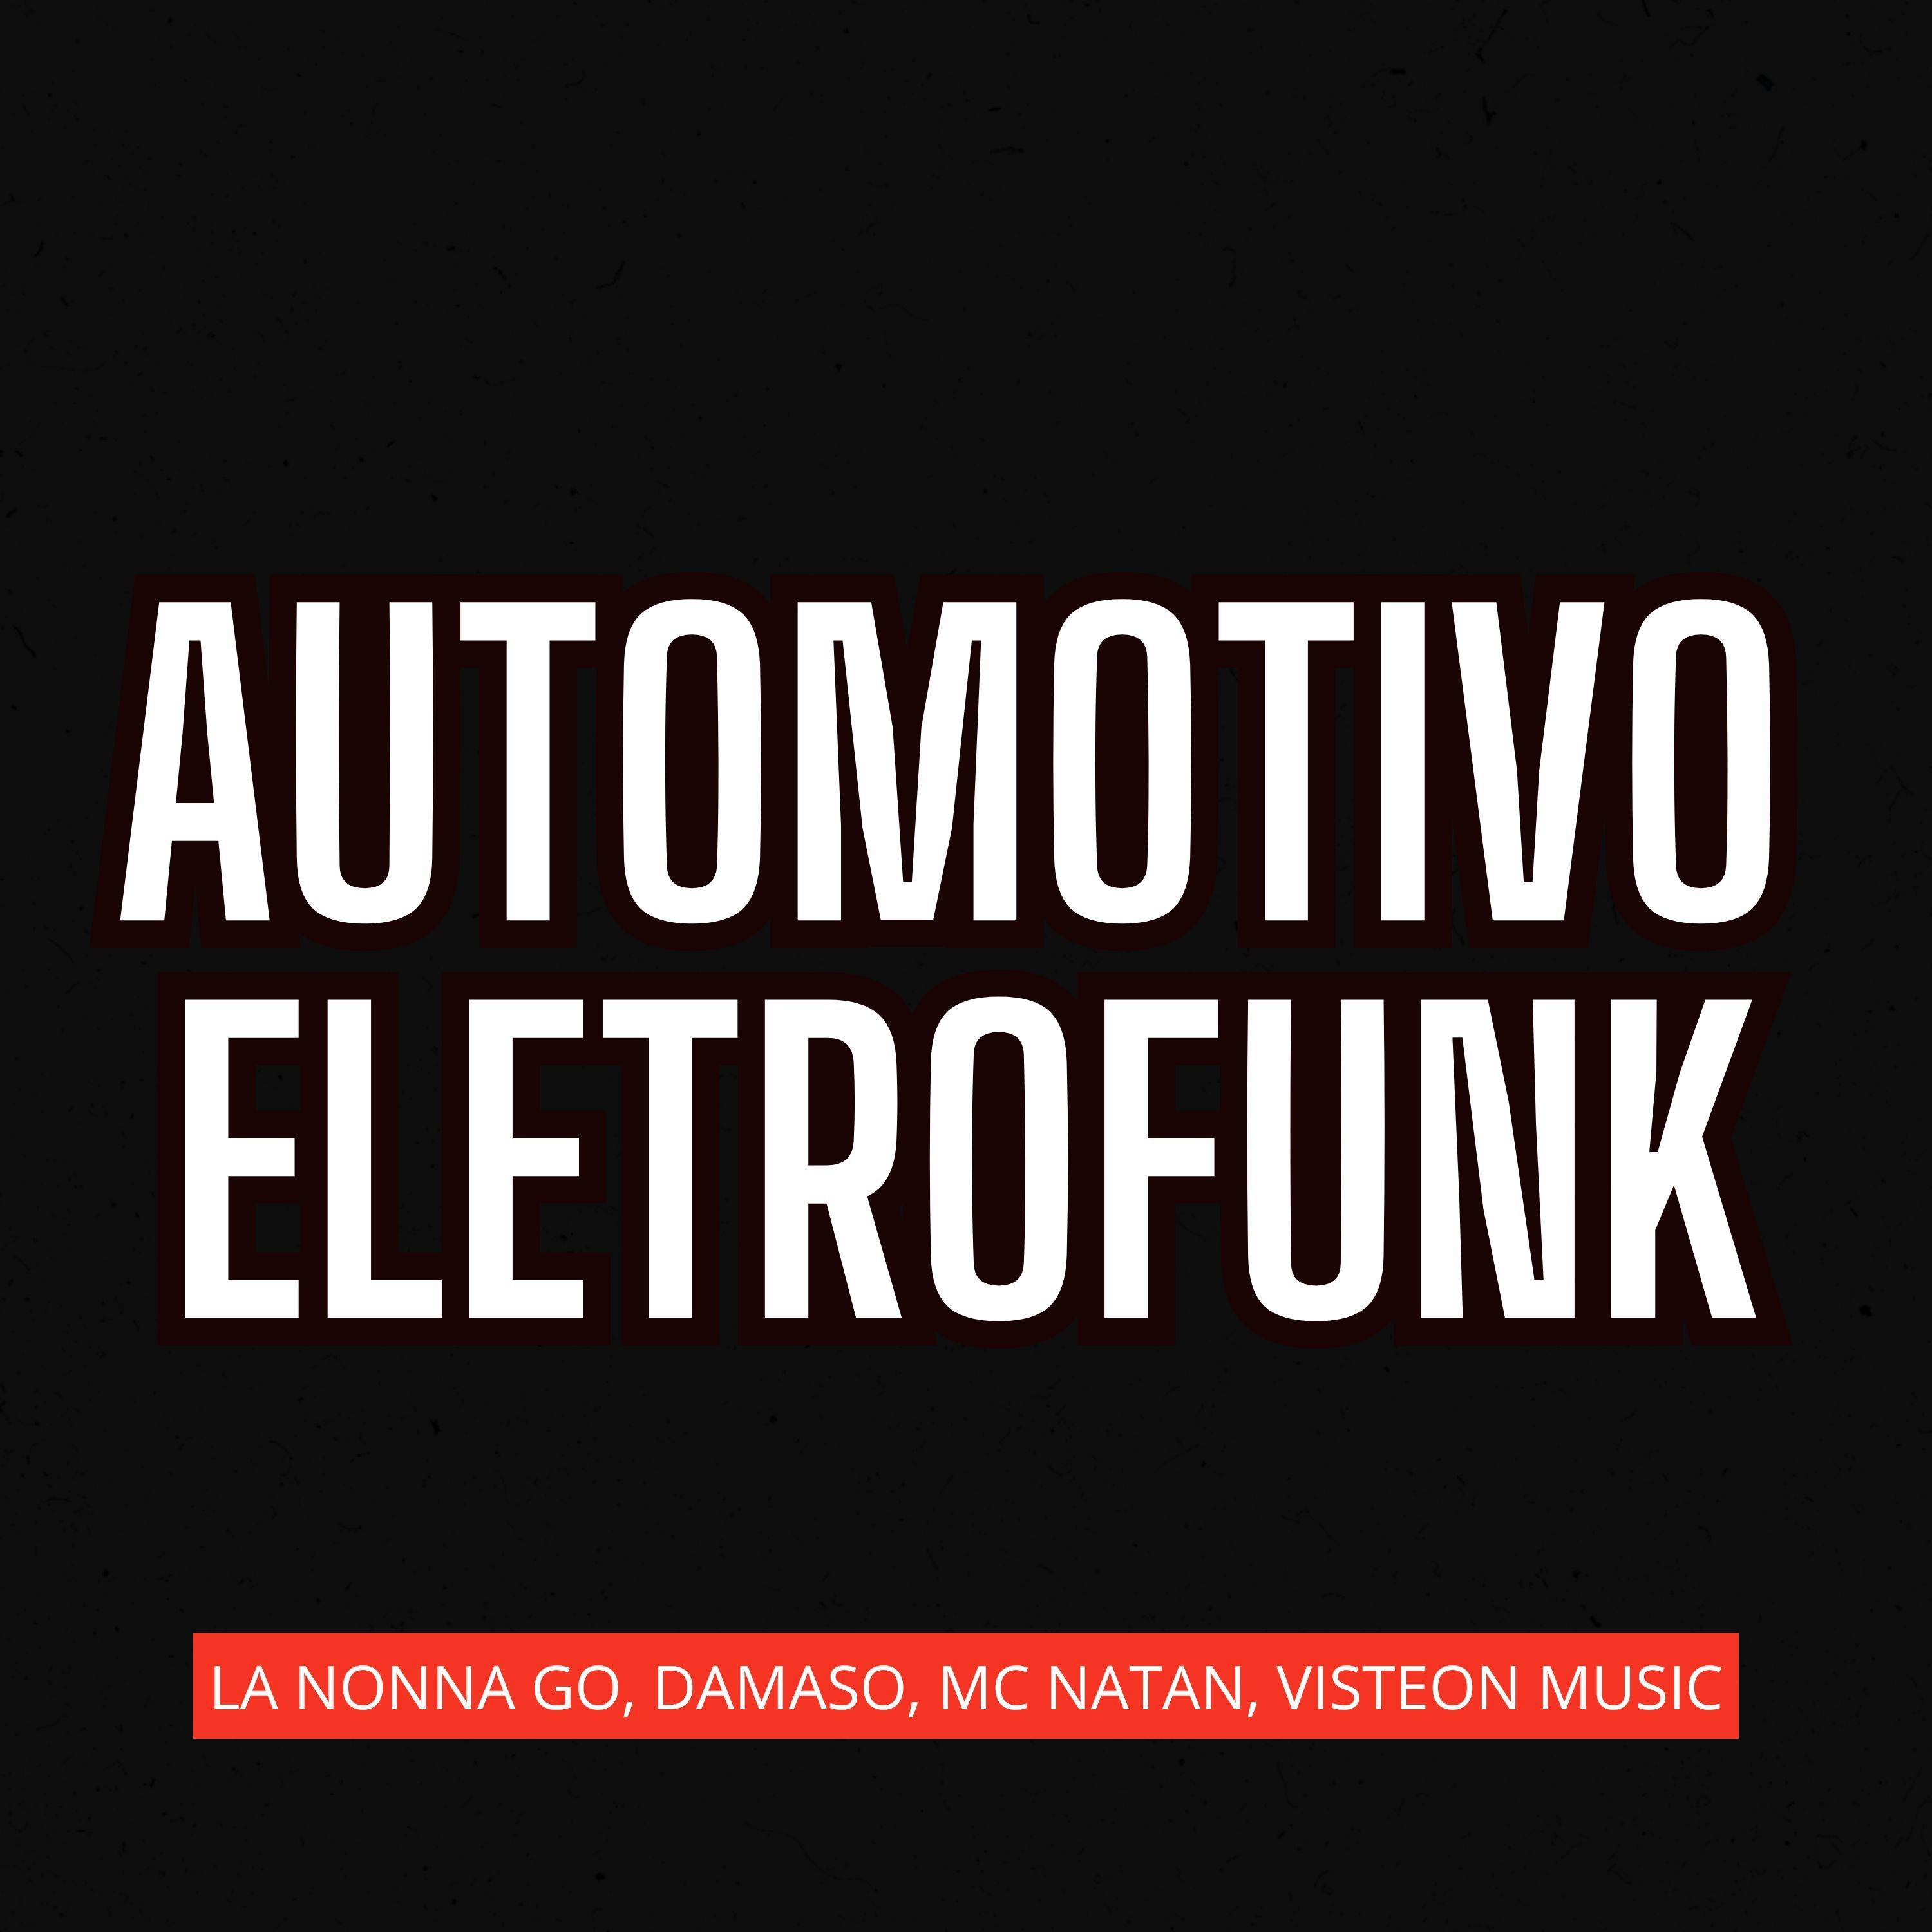 La Nonna Go - Automotivo Eletrofunk